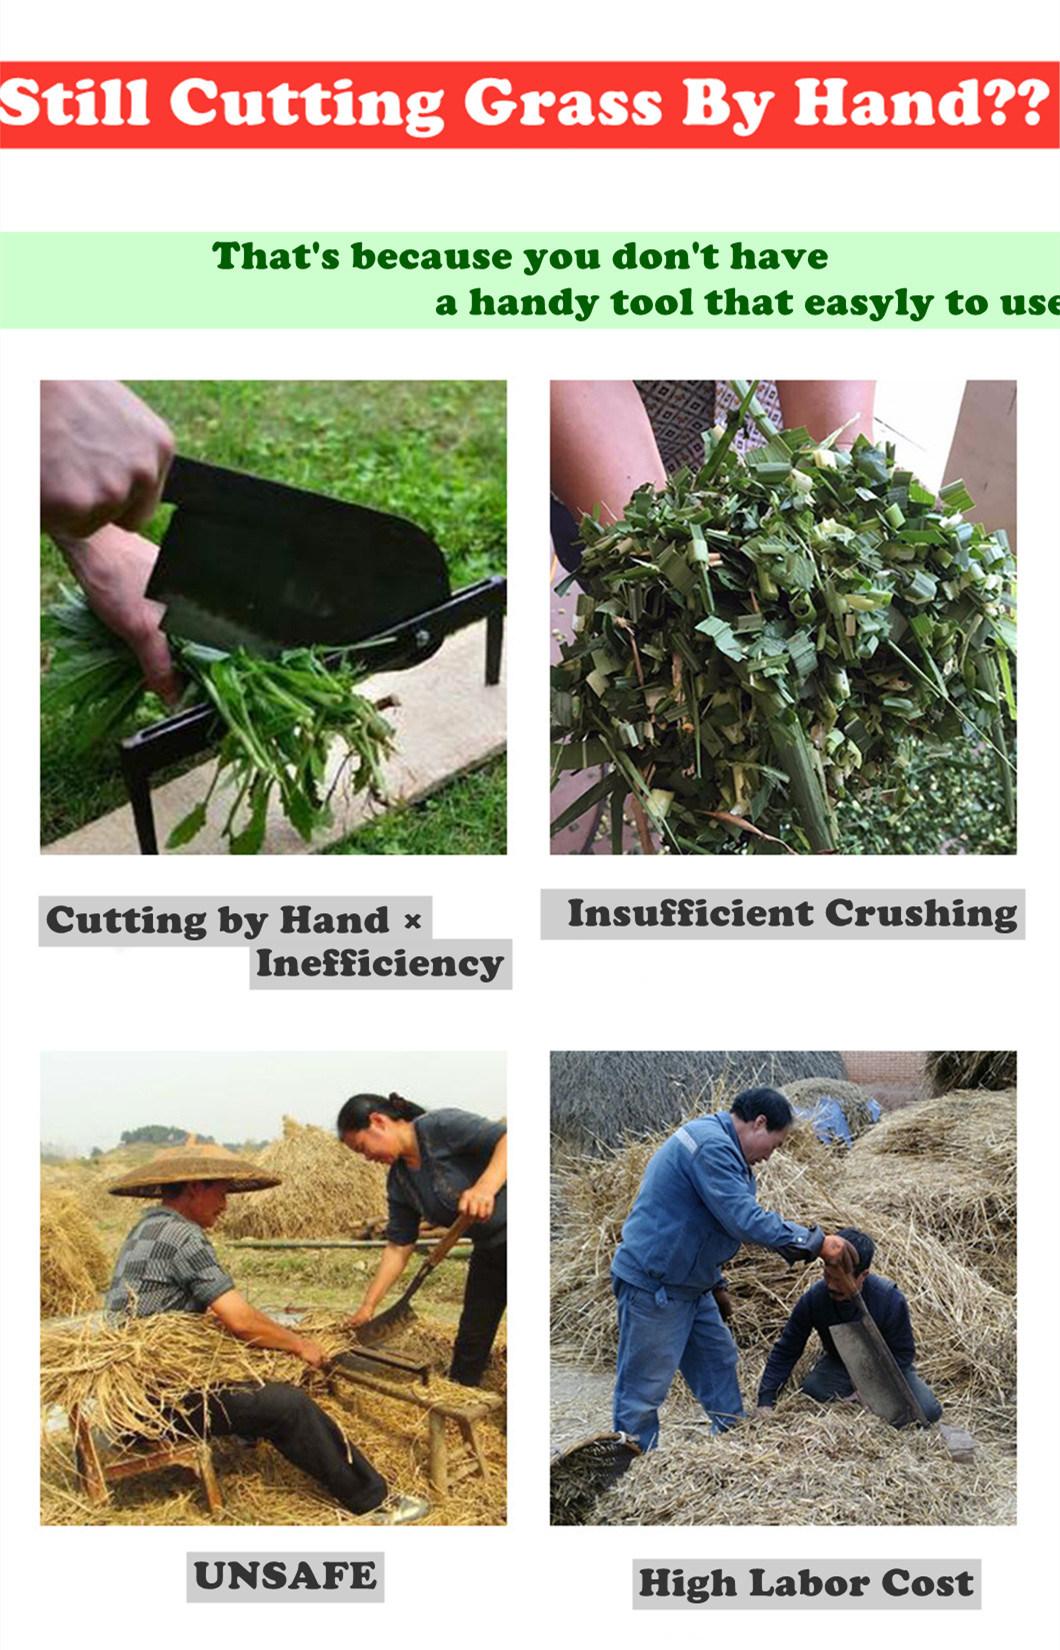 Pemotong Sekam Animal Feed Chaff Cutter Adjustable Hay Straw Grass Chopper Machine